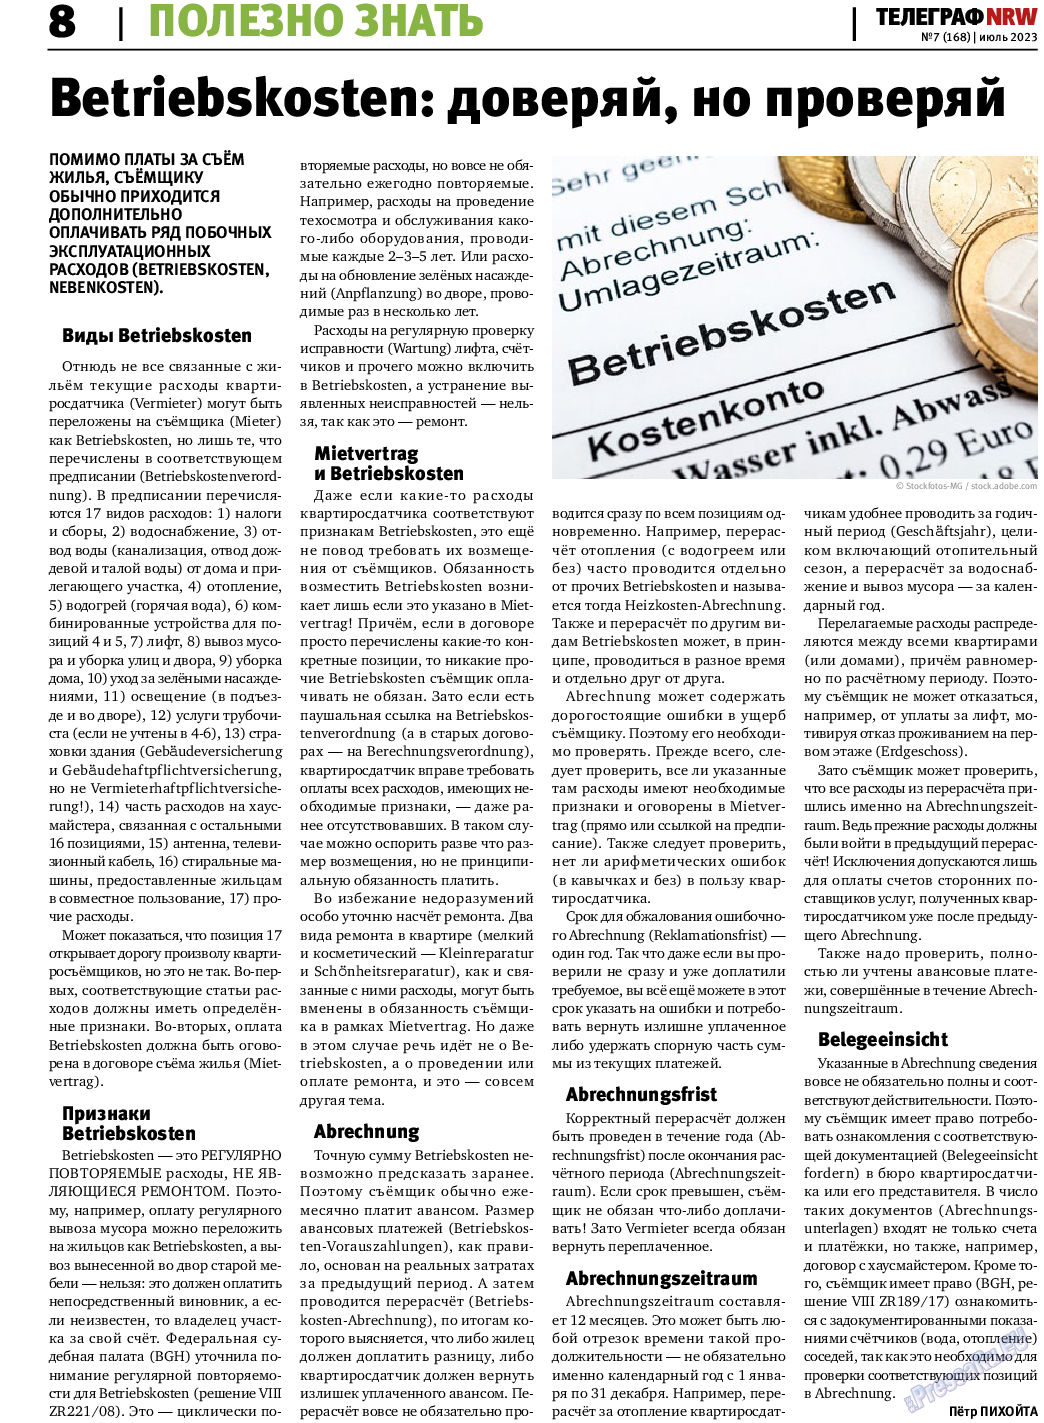 Телеграф NRW, газета. 2023 №168 стр.8